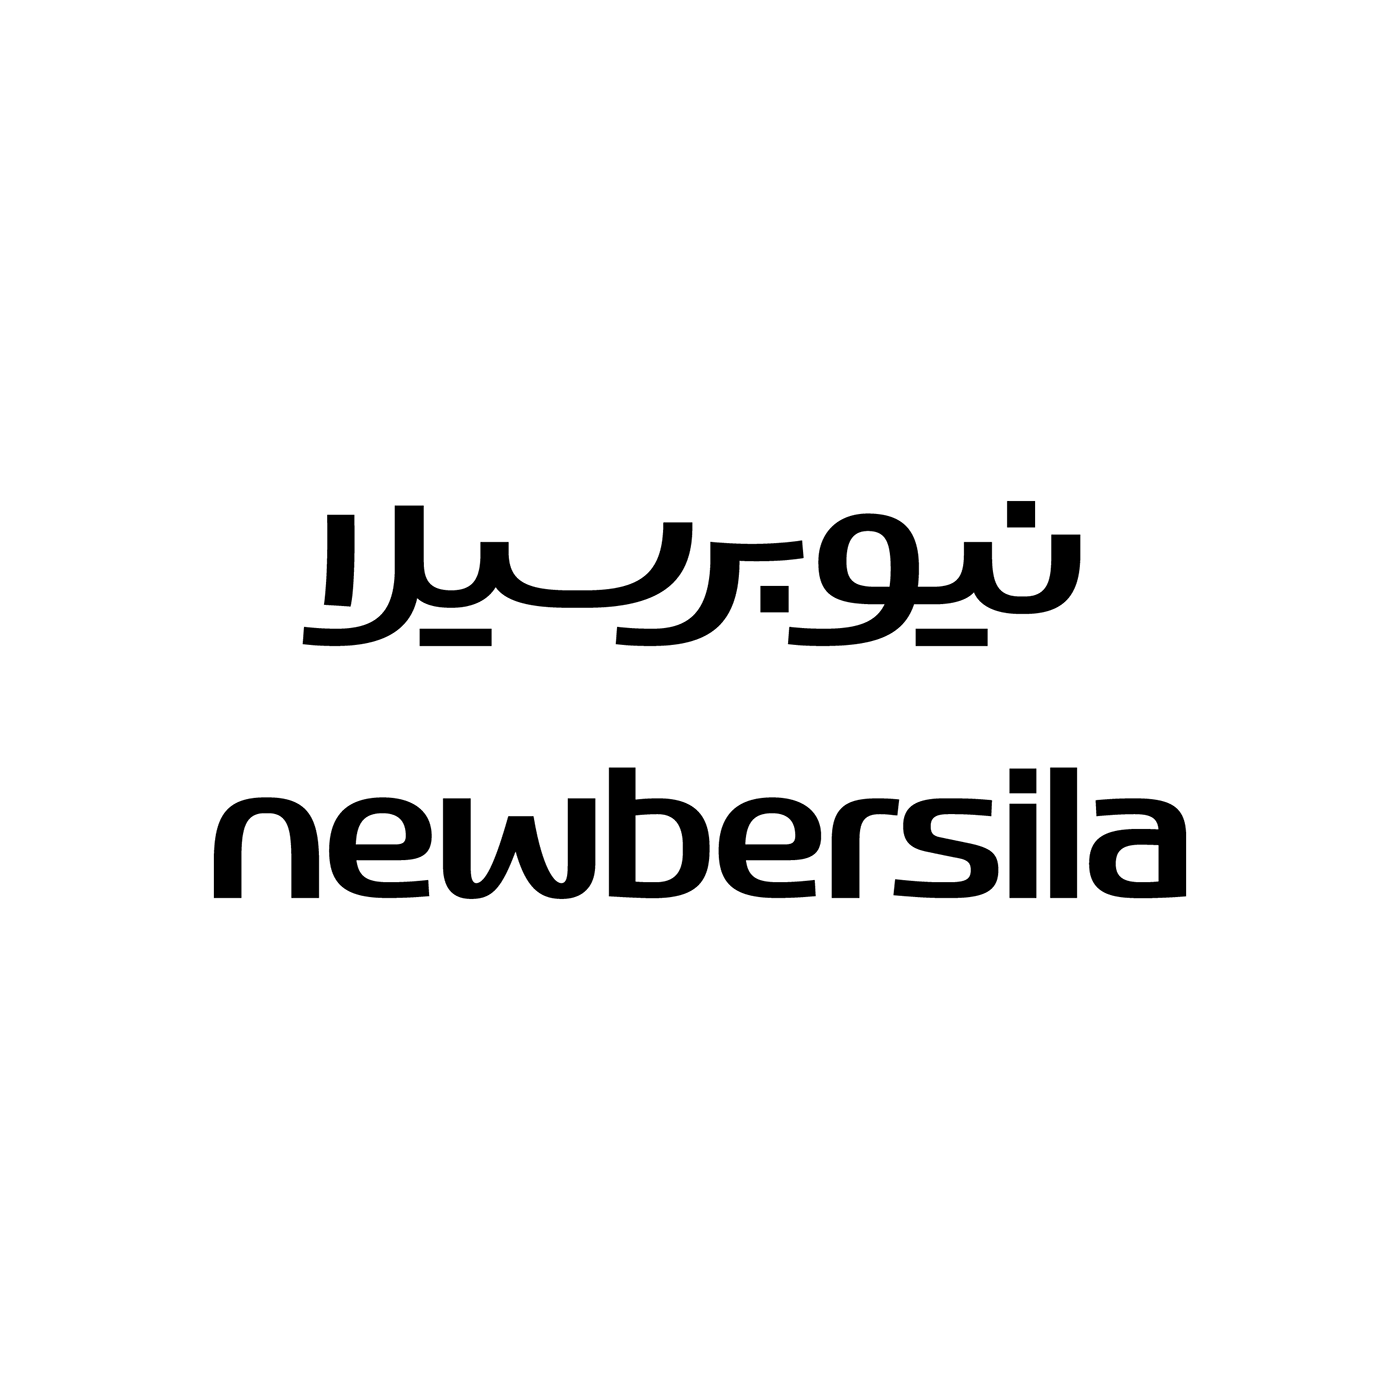 arabic persian bilingual typography   Logotype lettering type Matchmaking logo Calligraphy  